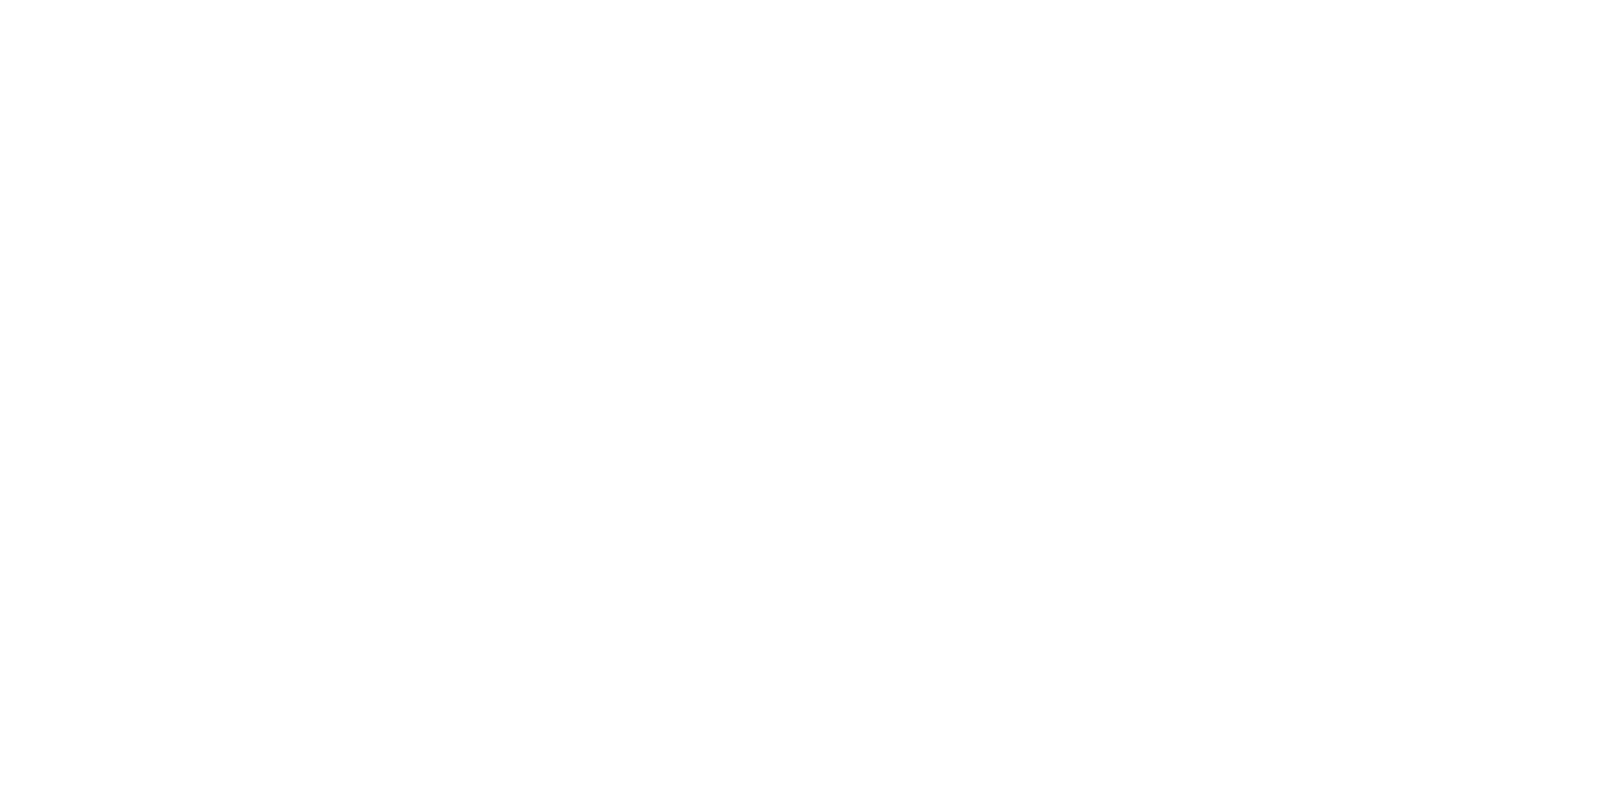 BJR Logo